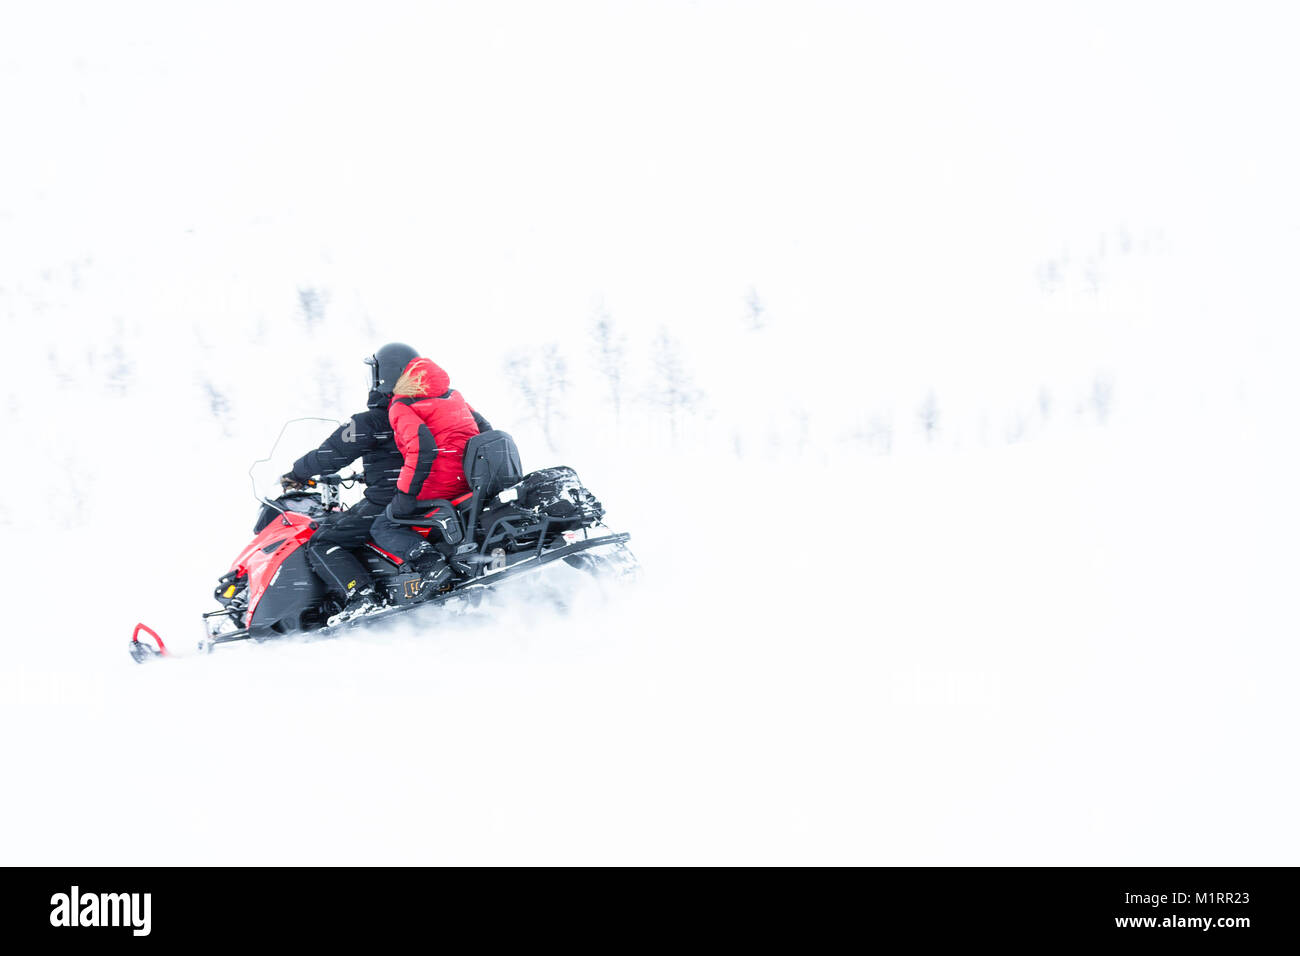 Skibotn, Norway. Kjetil Skogli and Annika Summerson riding snowmobile. Stock Photo